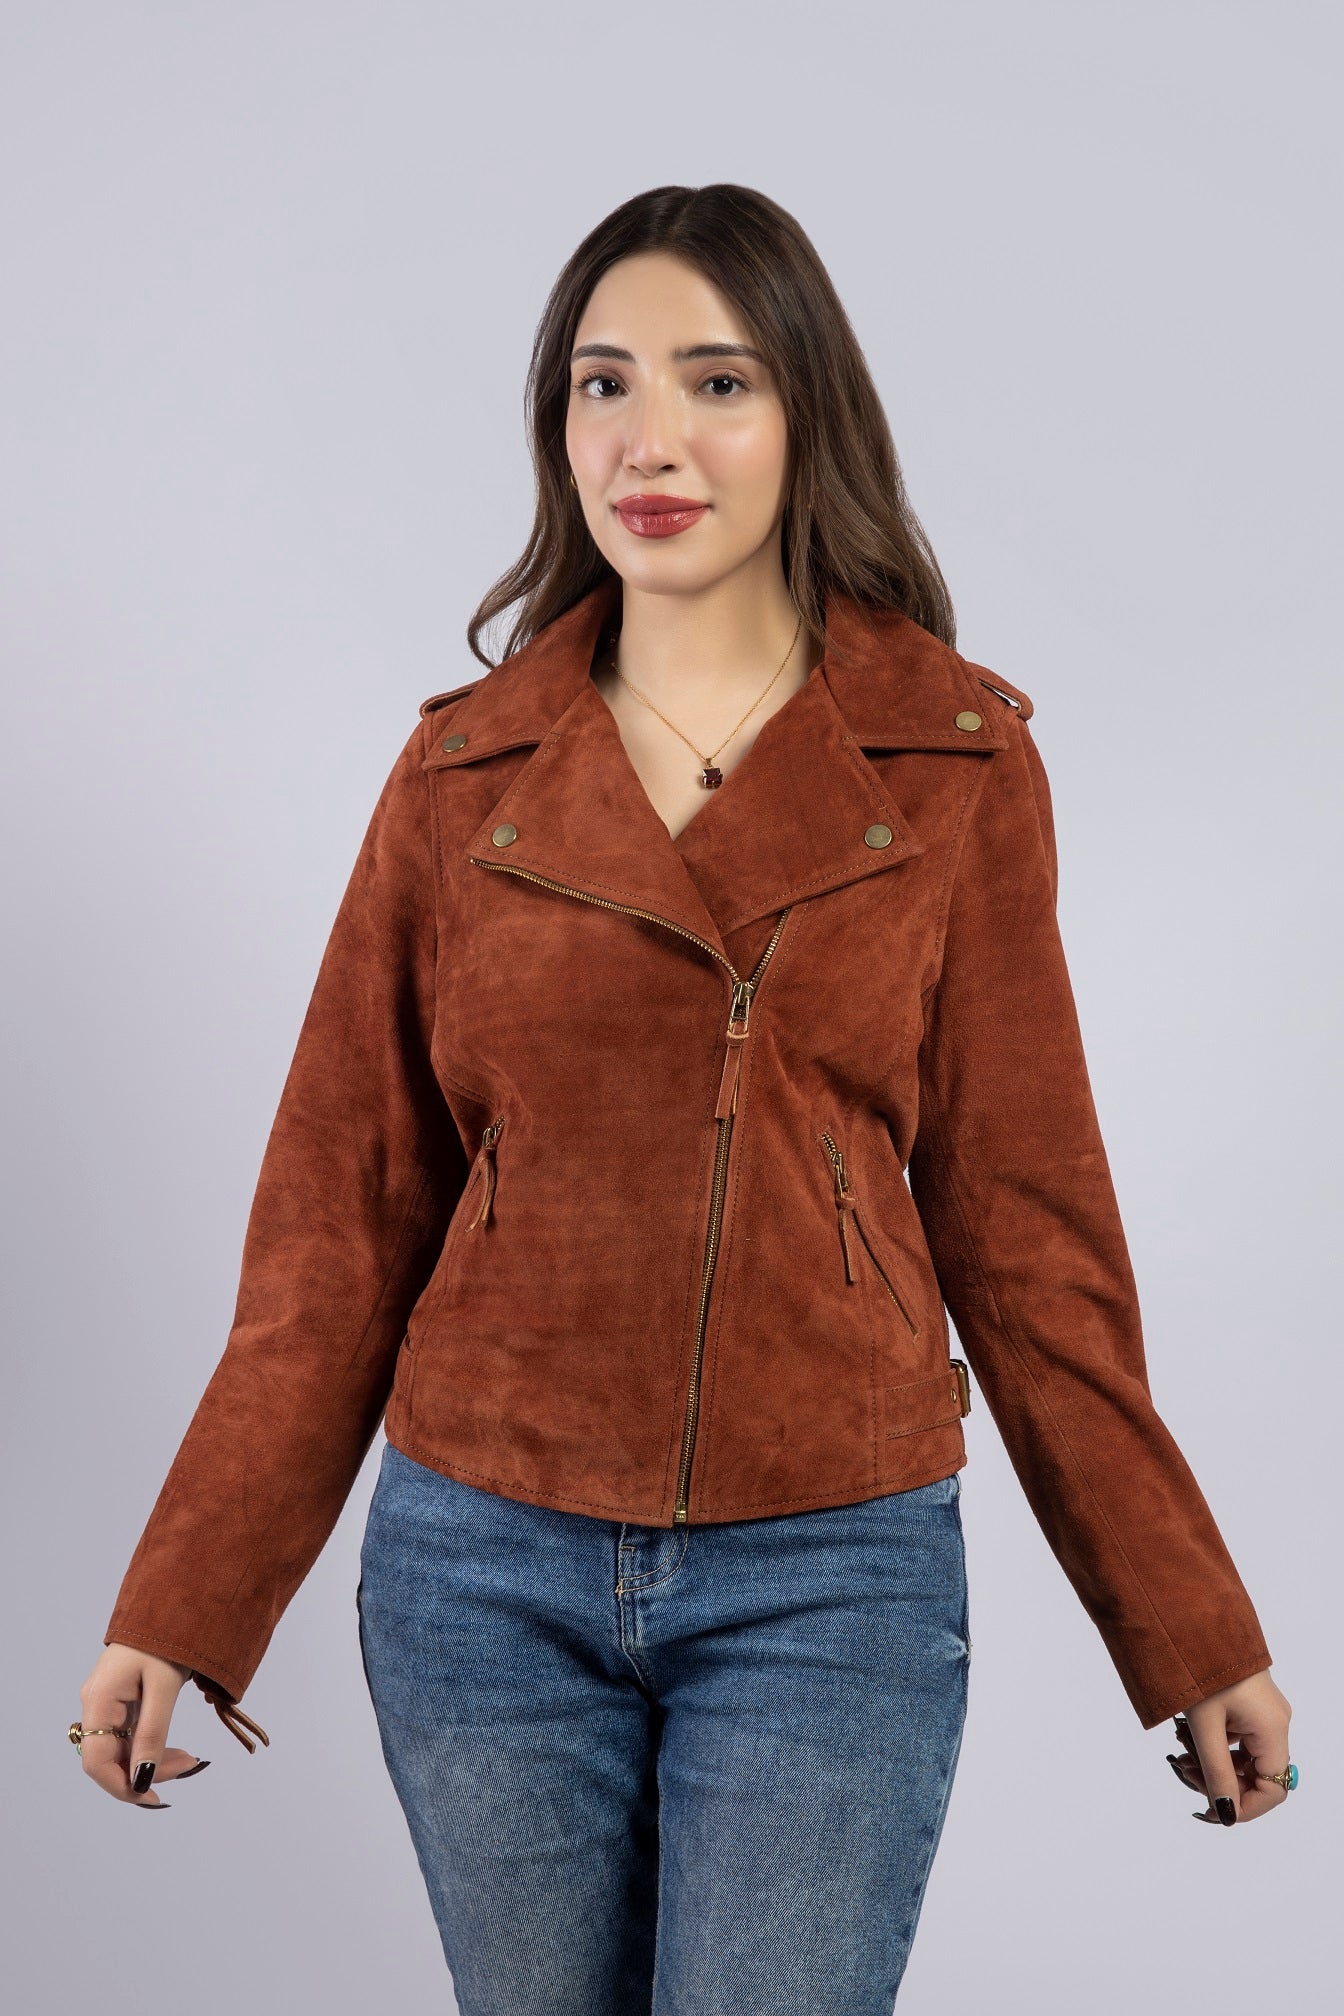 Women's Western Suede Leather Jacket - Jackets Junction